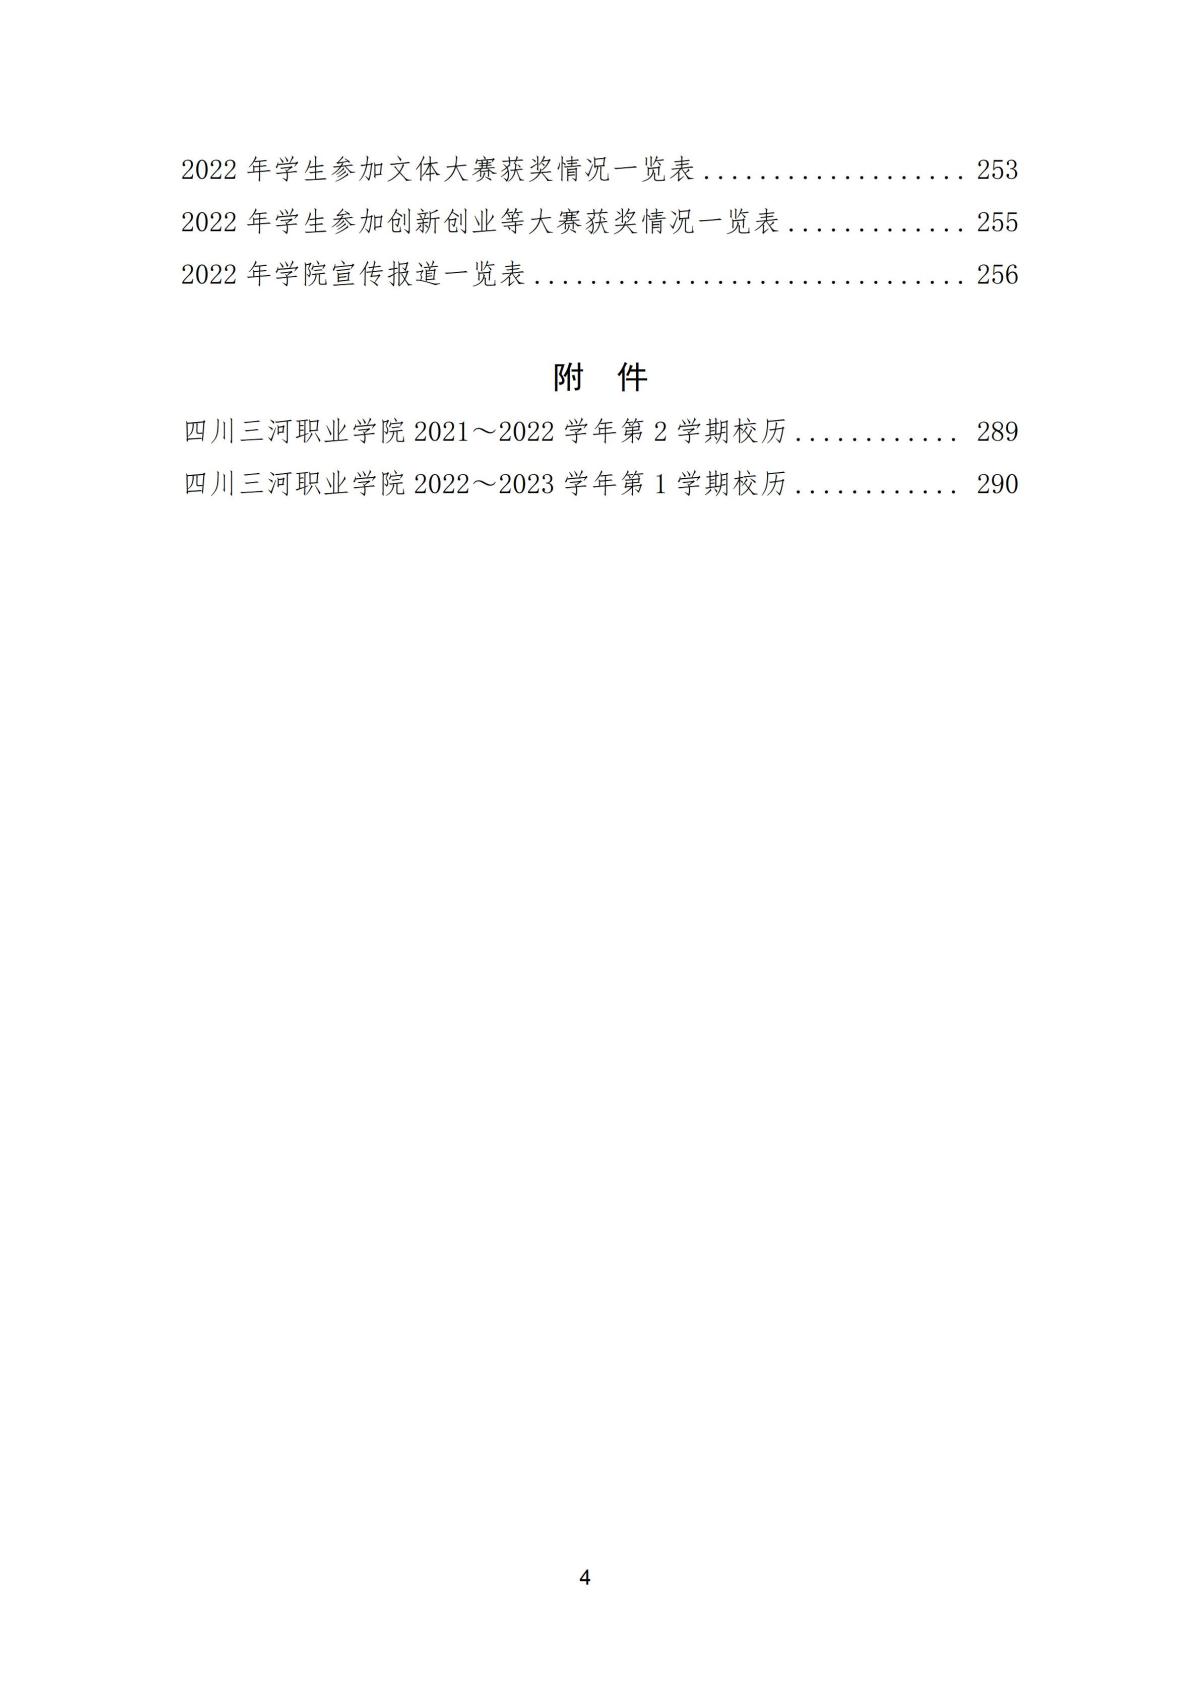 kpl竞猜平台(中国)有限公司官网年鉴（2022卷）_04(1)